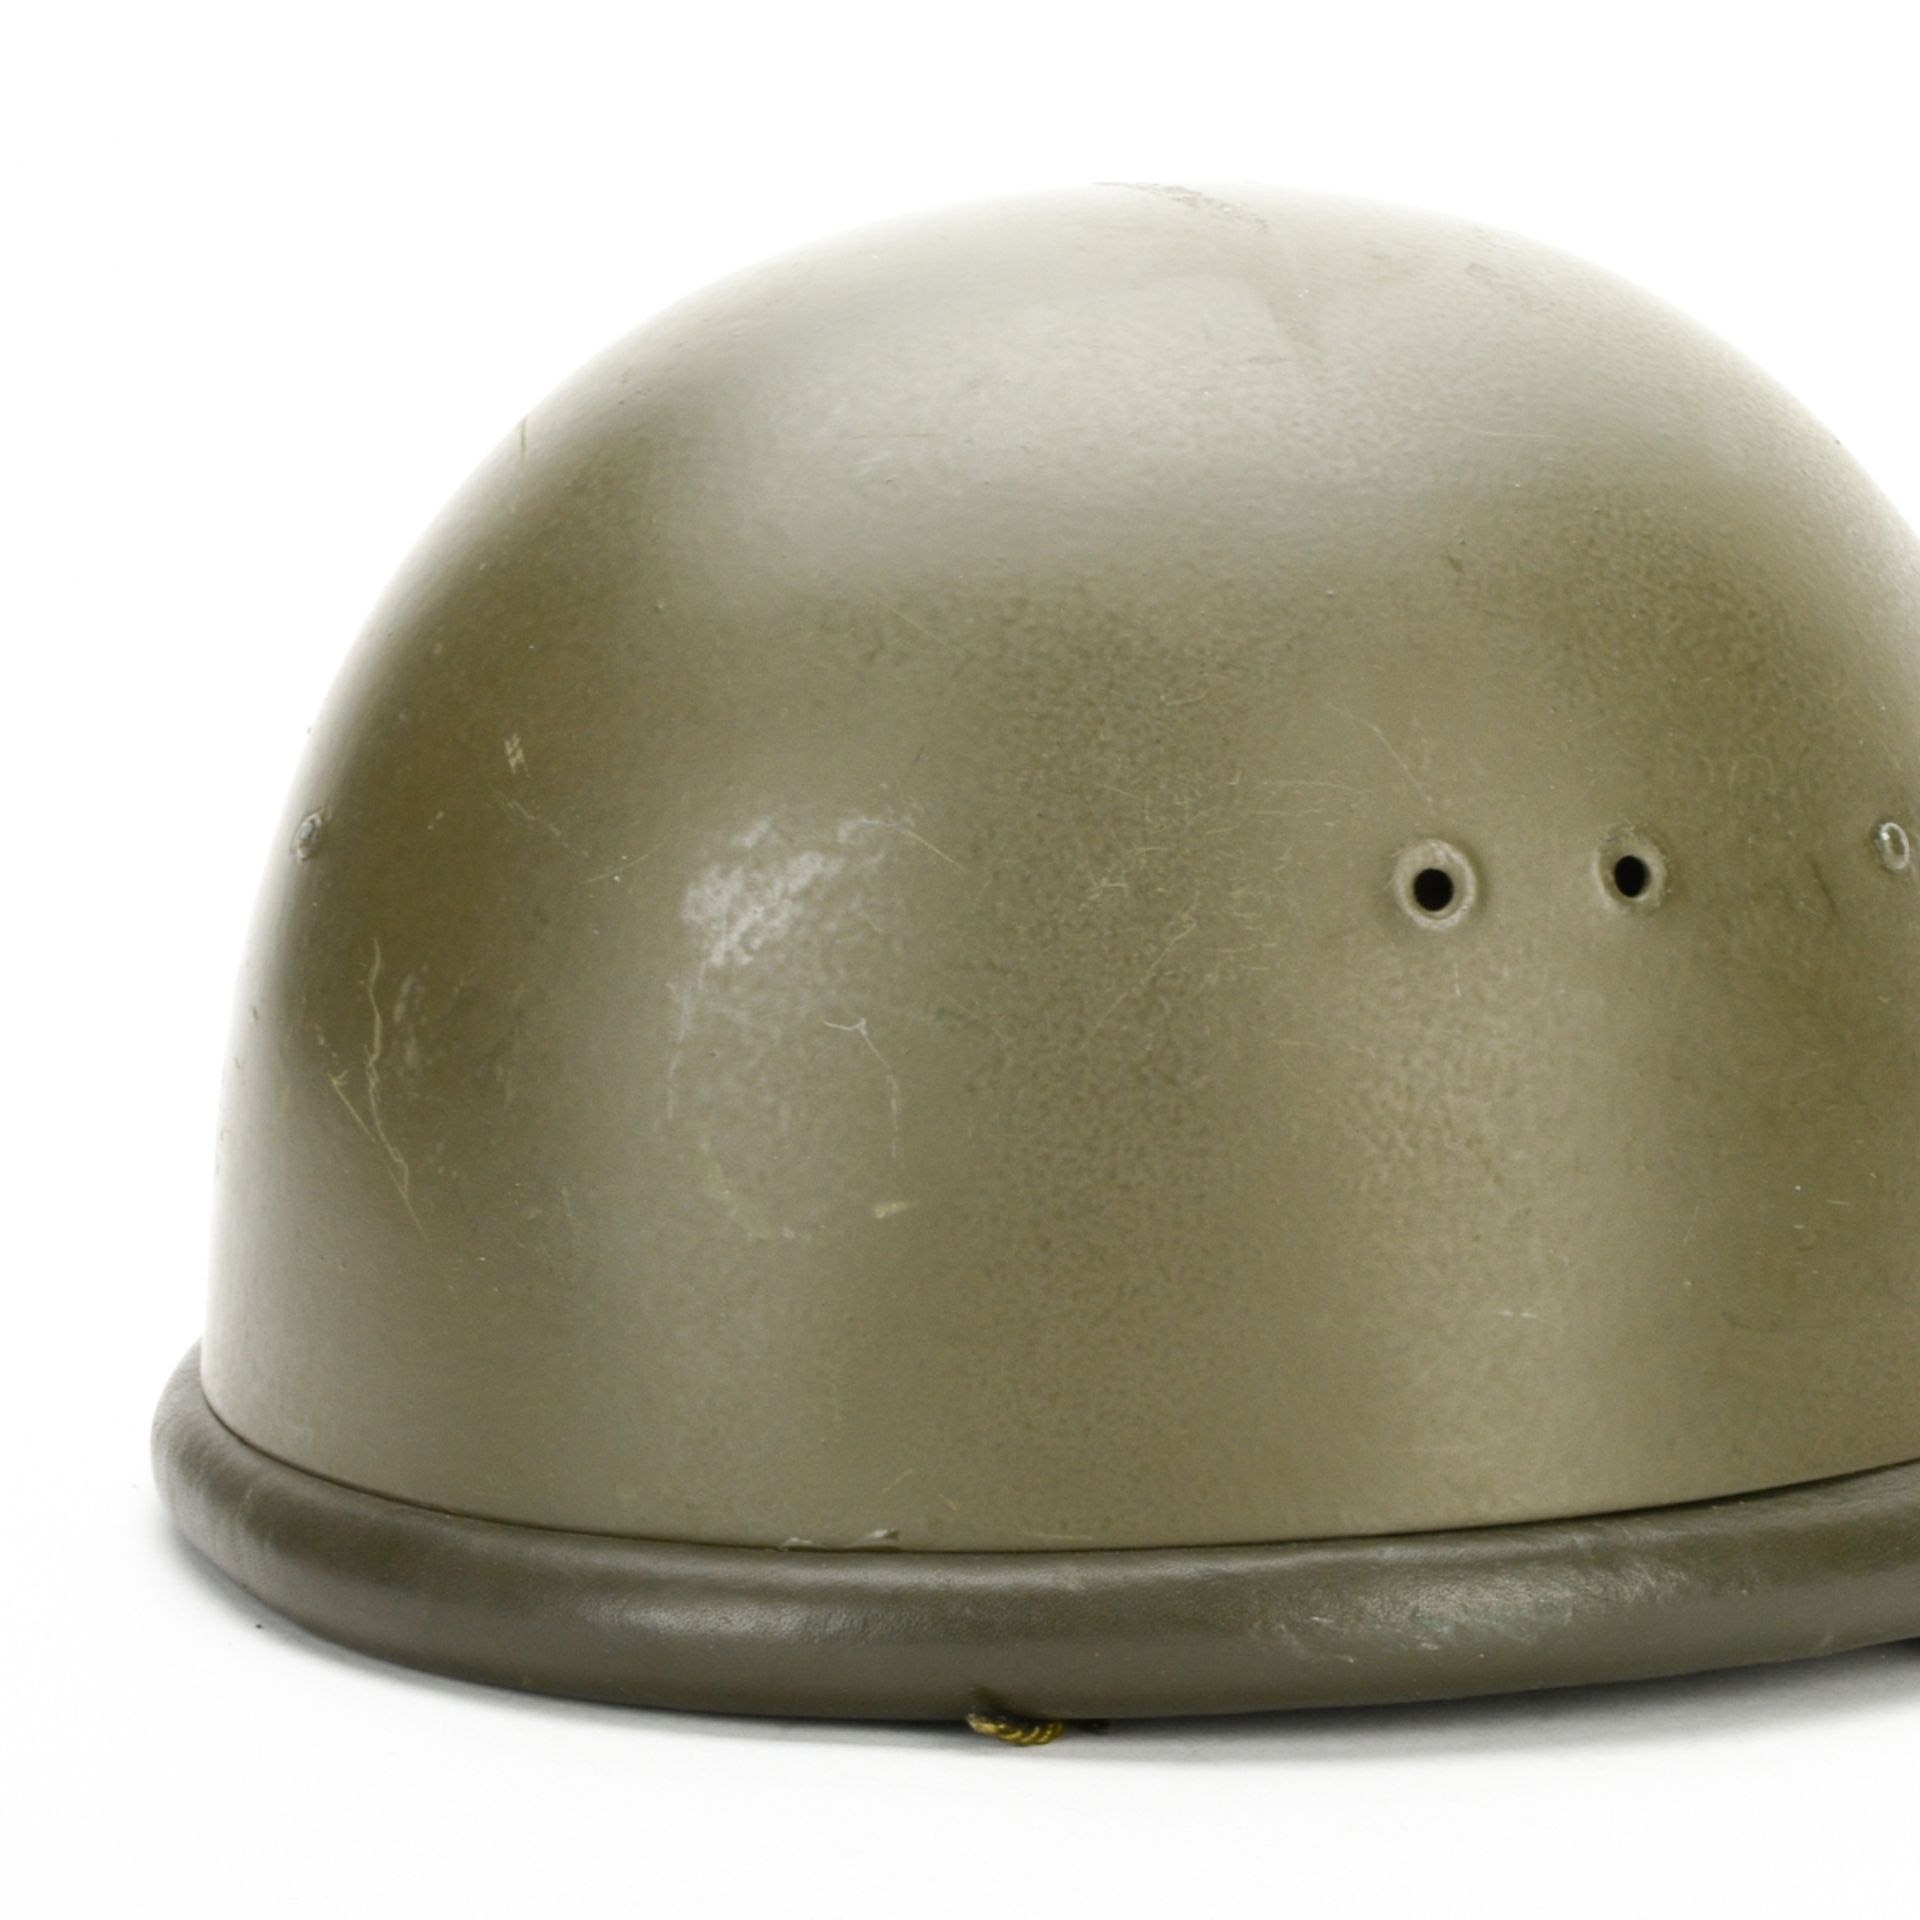 Fallschirmspringer-Helm